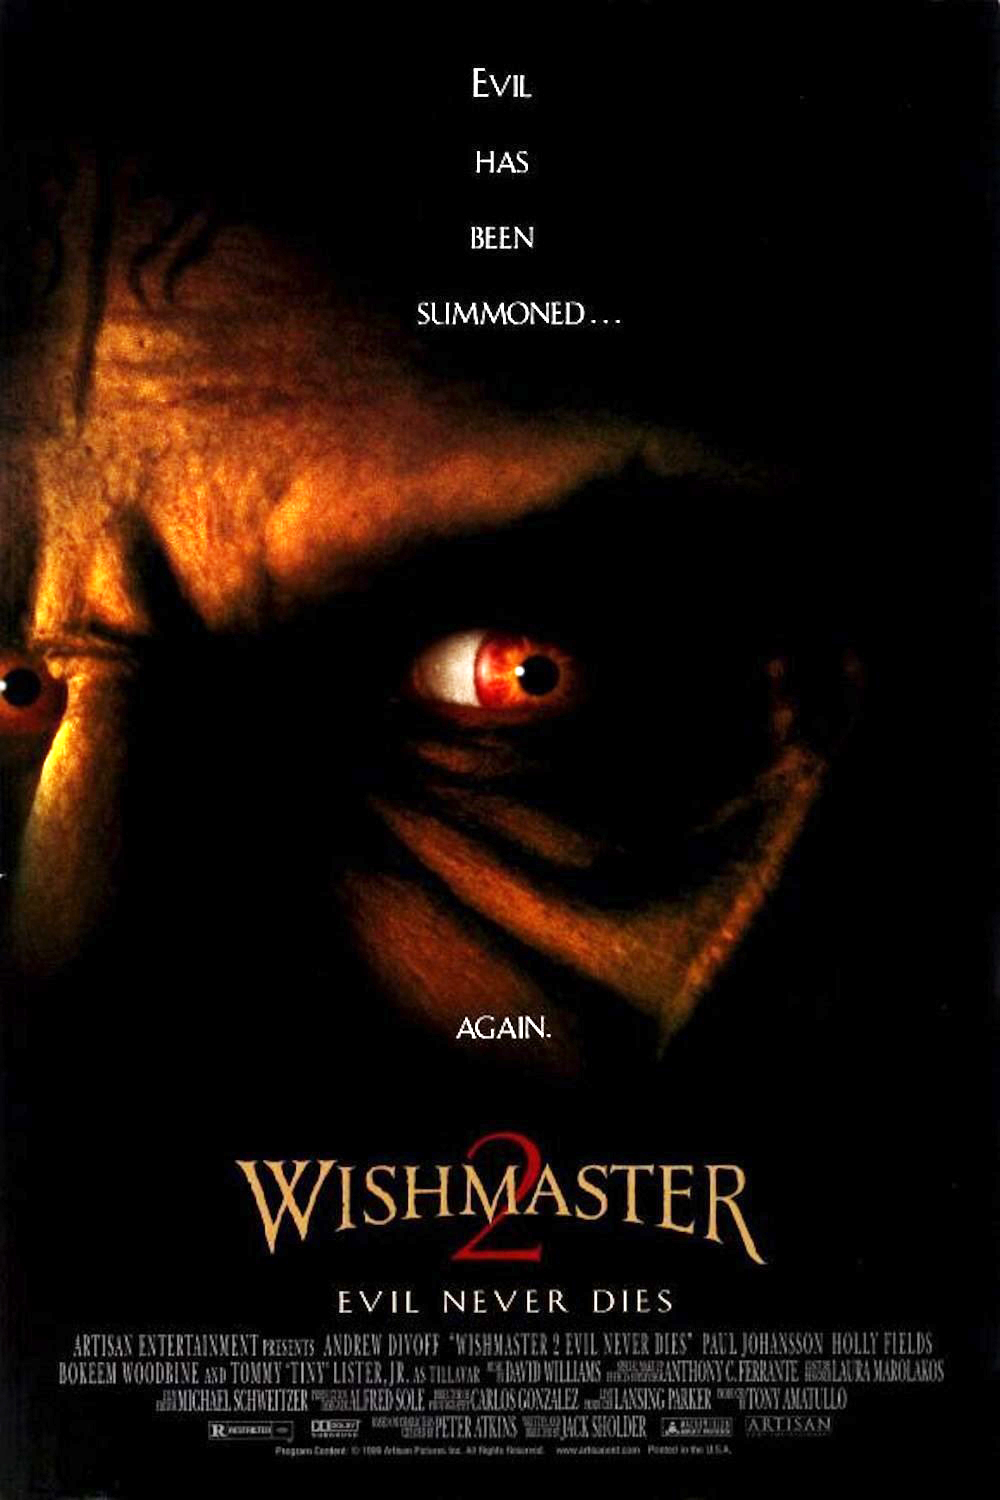 FULL MOVIE: Wishmaster 2: Evil Never Dies (1999)